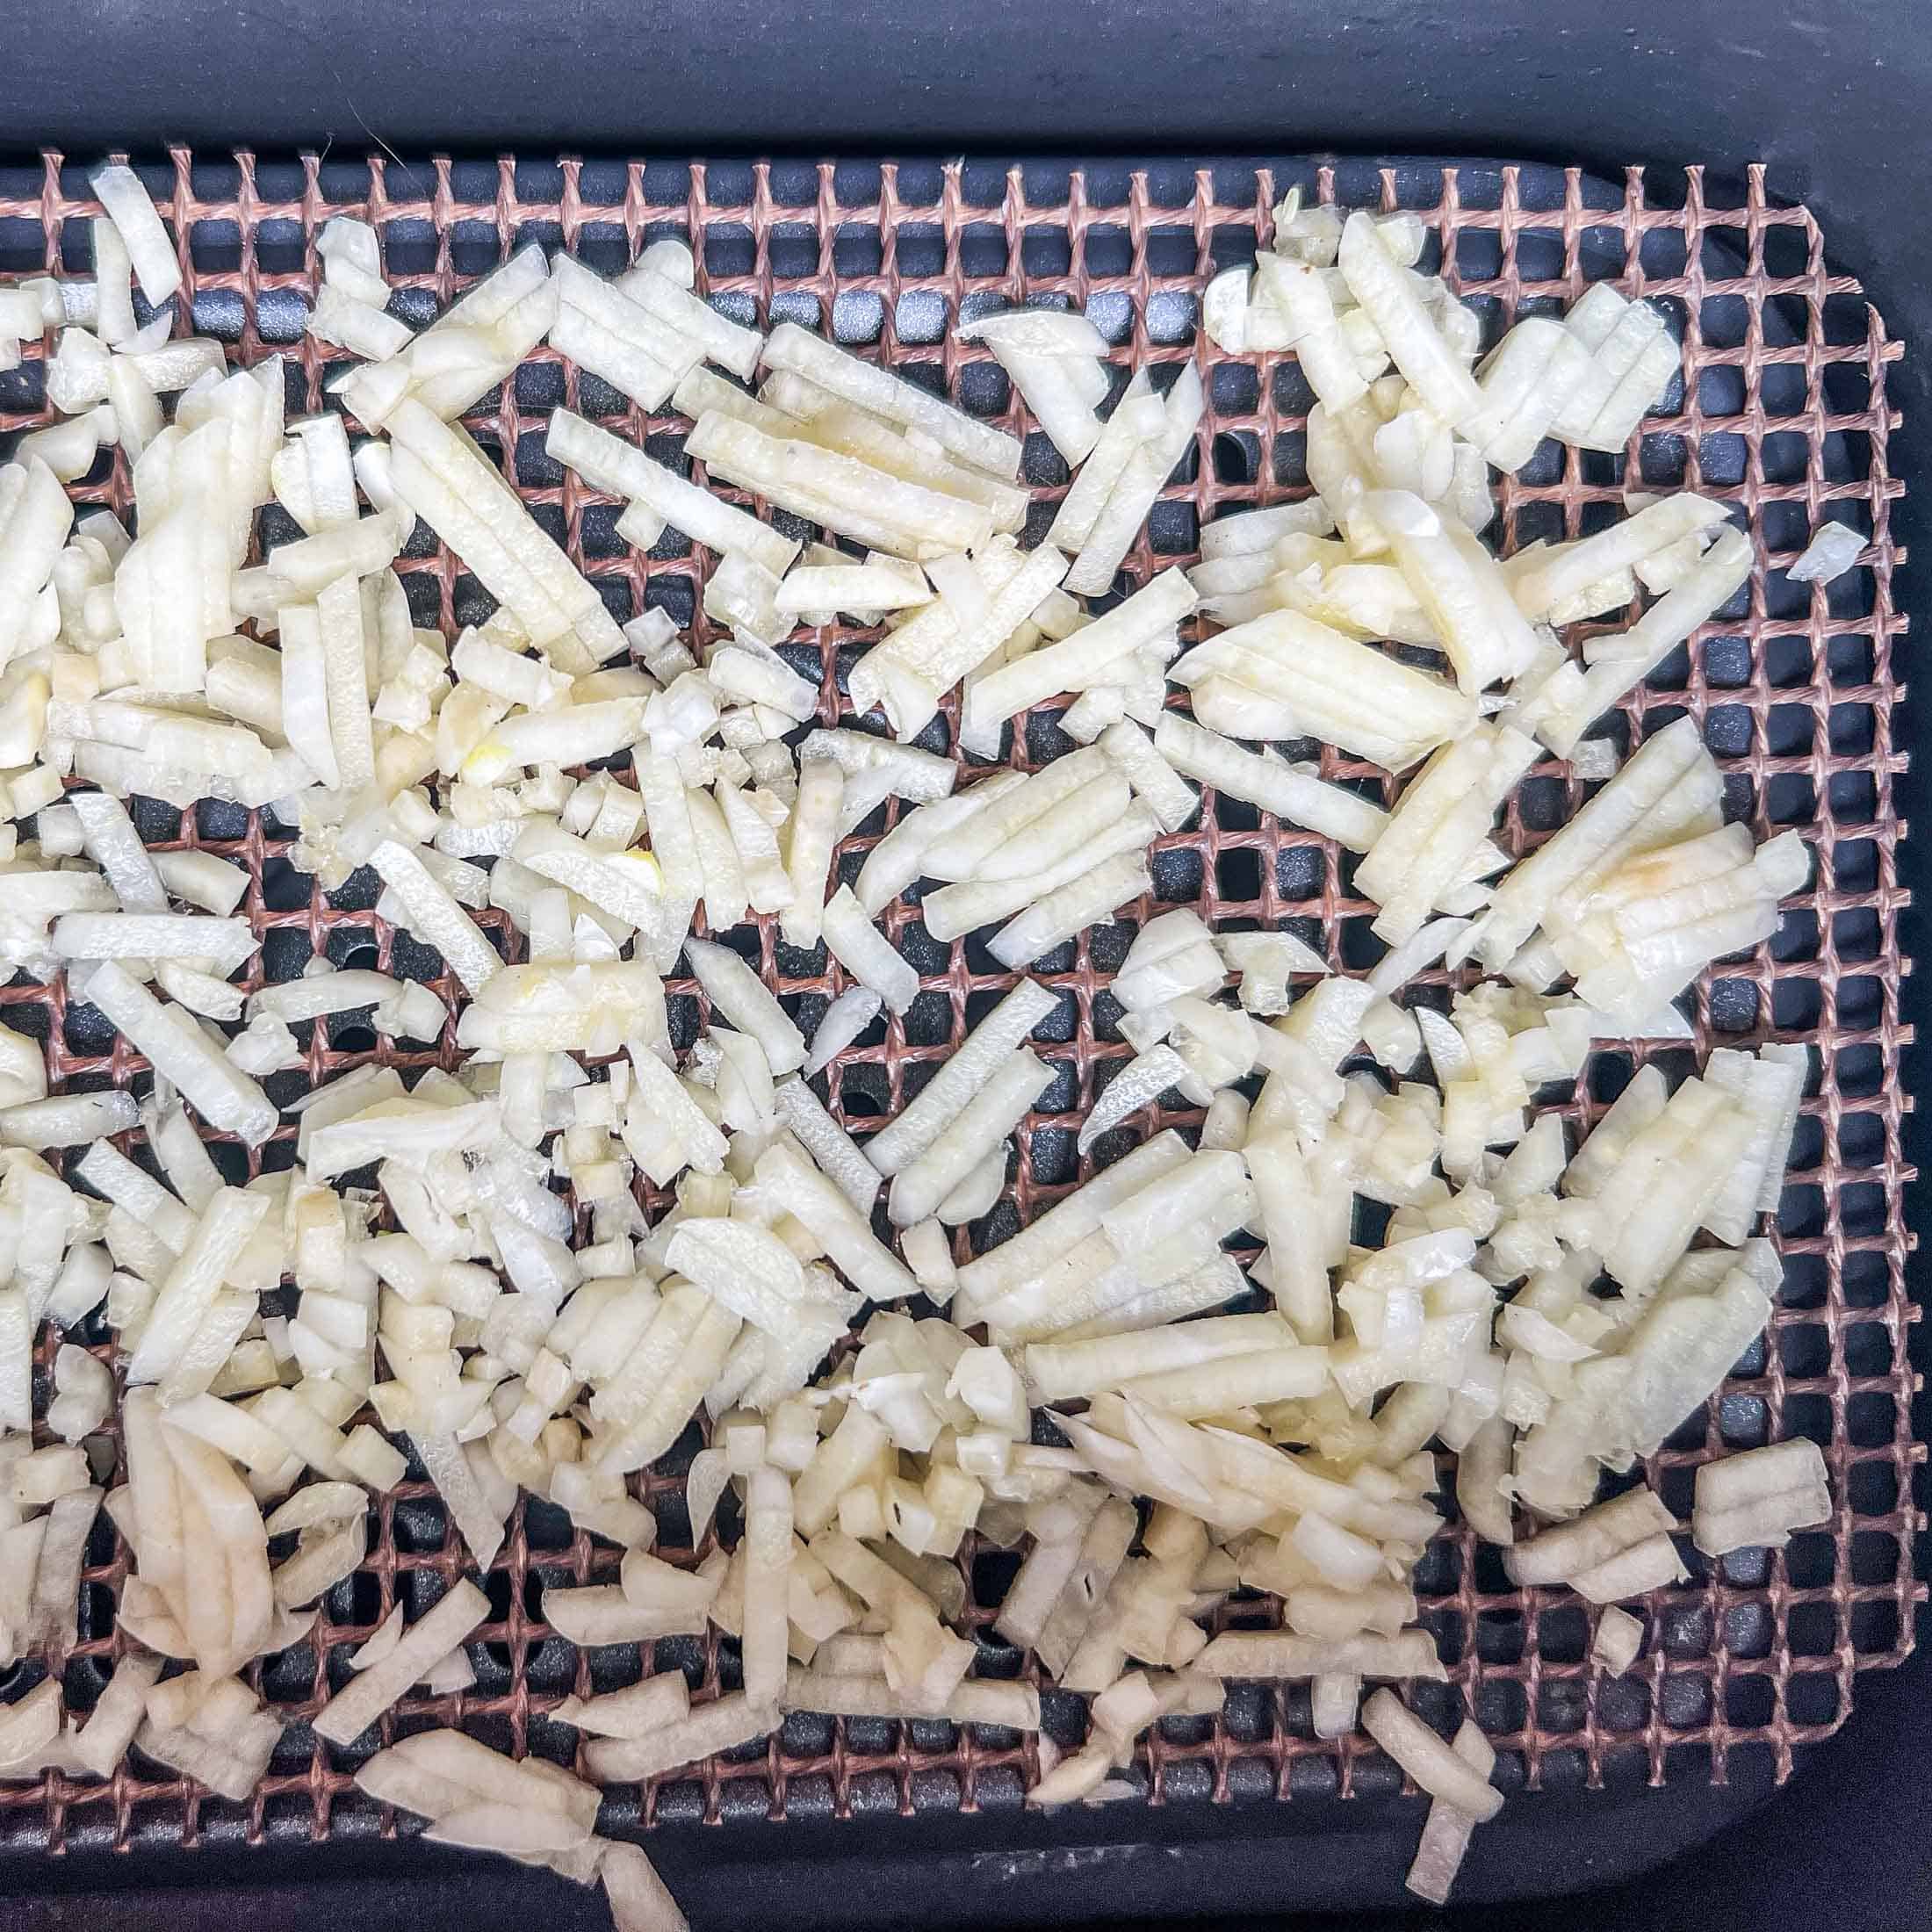 Minced garlic in an air fryer basket.